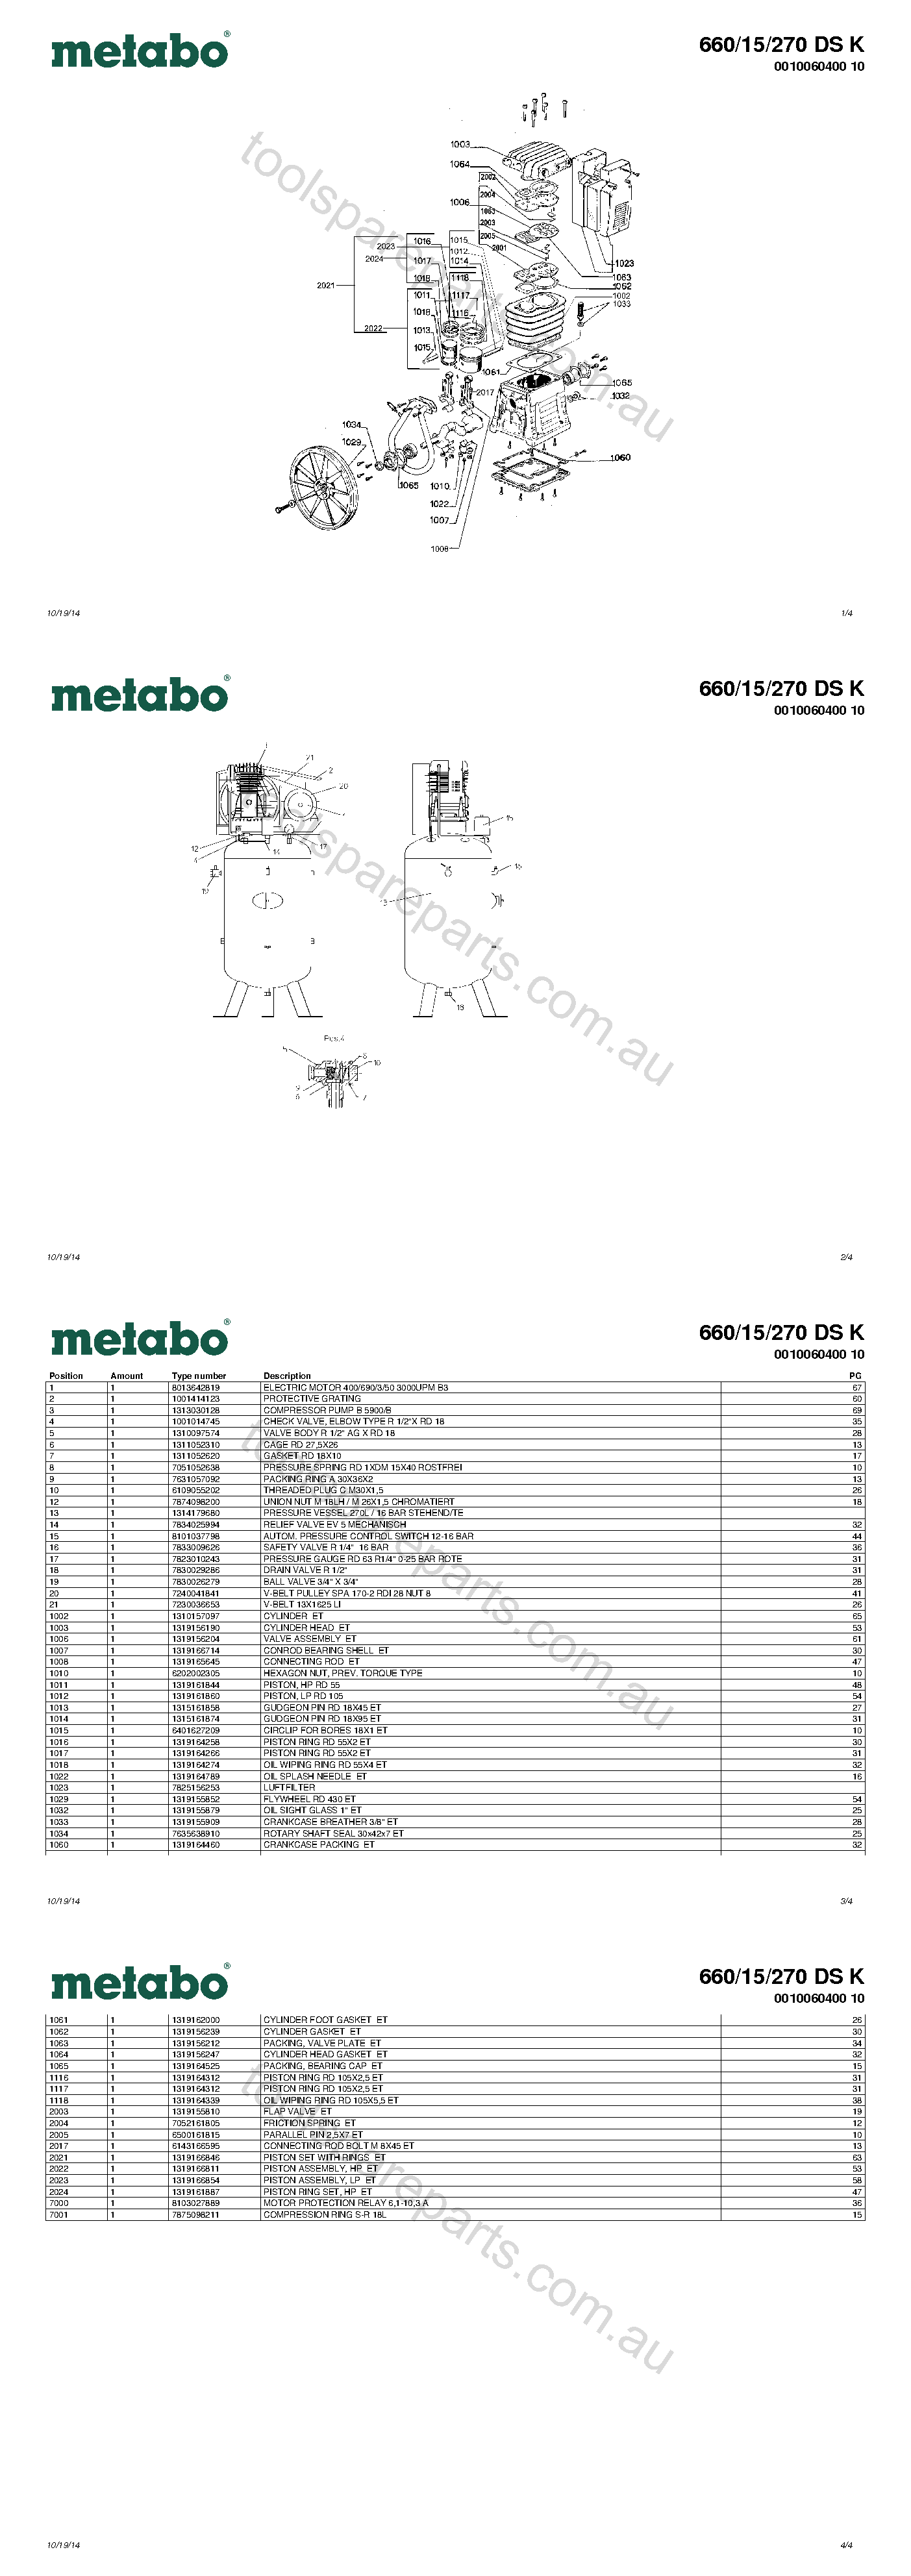 Metabo 660/15/270 DS K 0010060400 10  Diagram 1